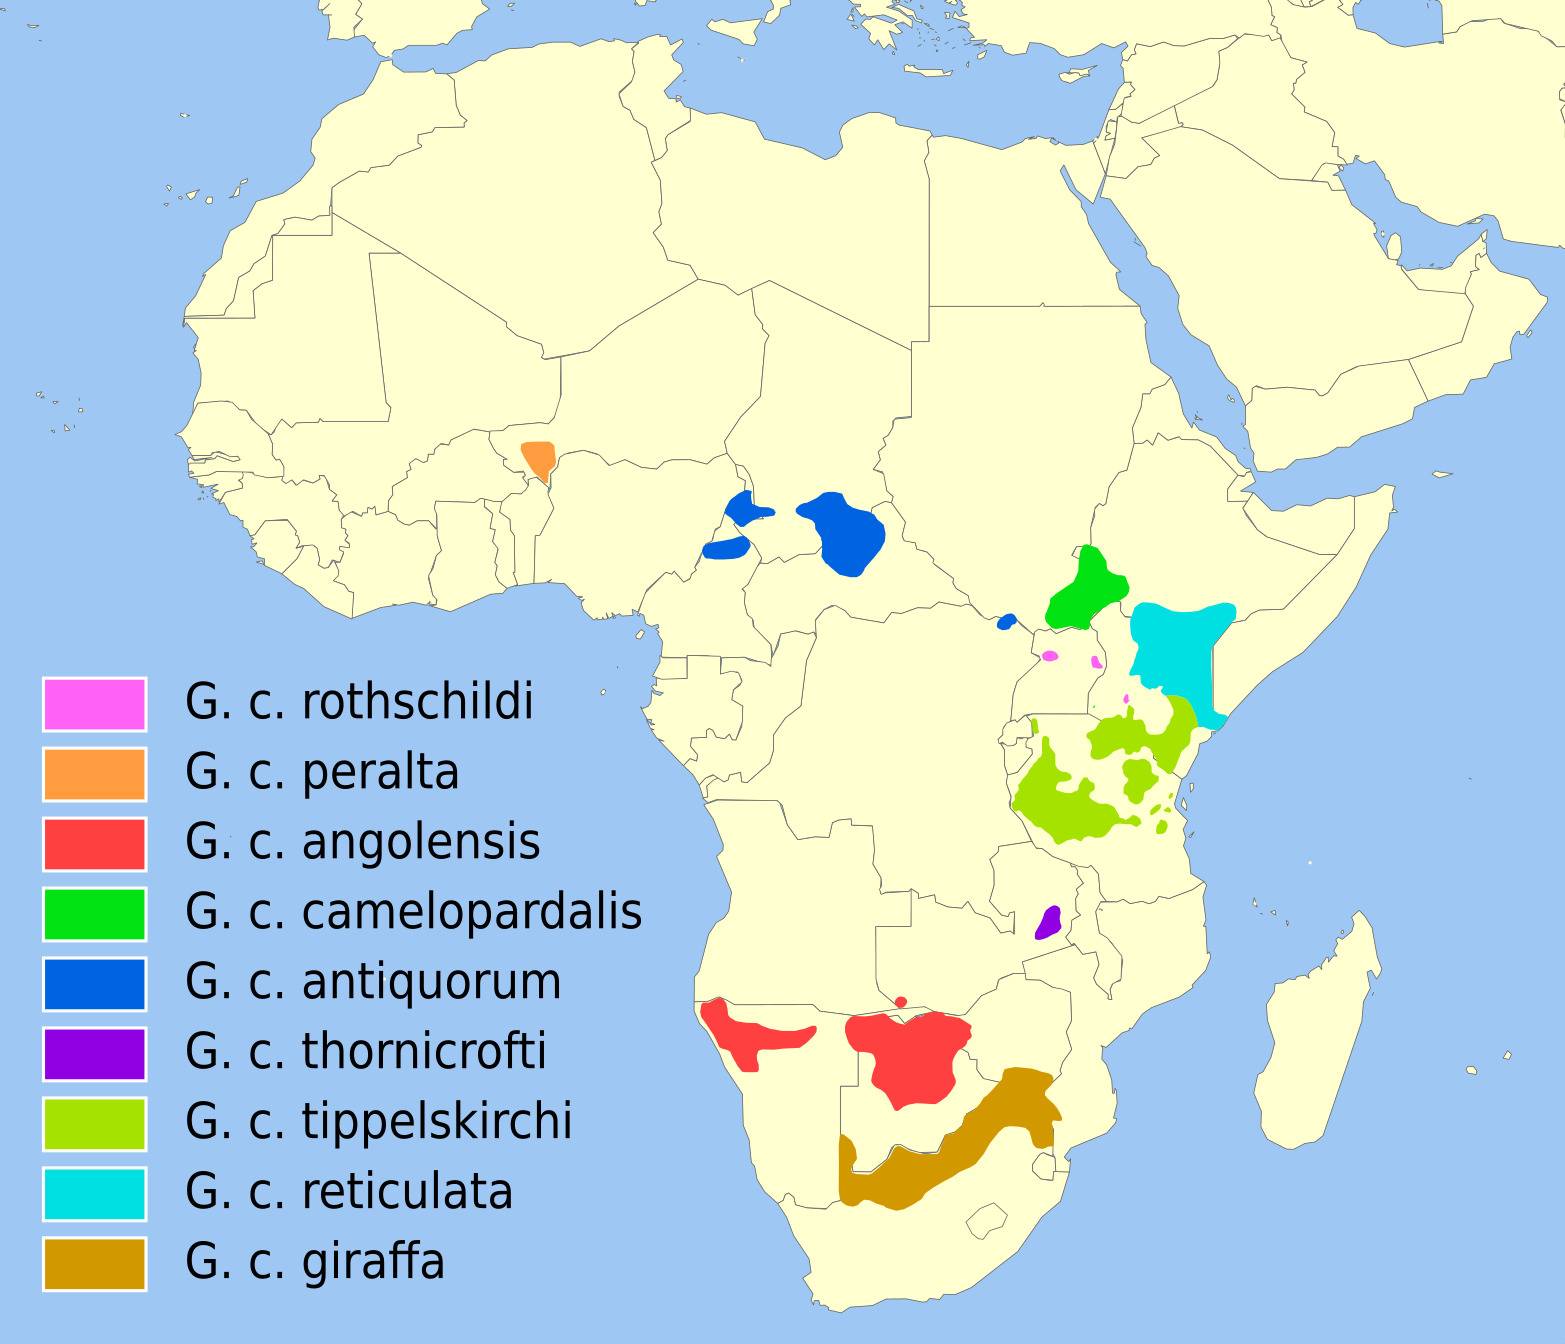 Giraffe Distribution Map of Africa